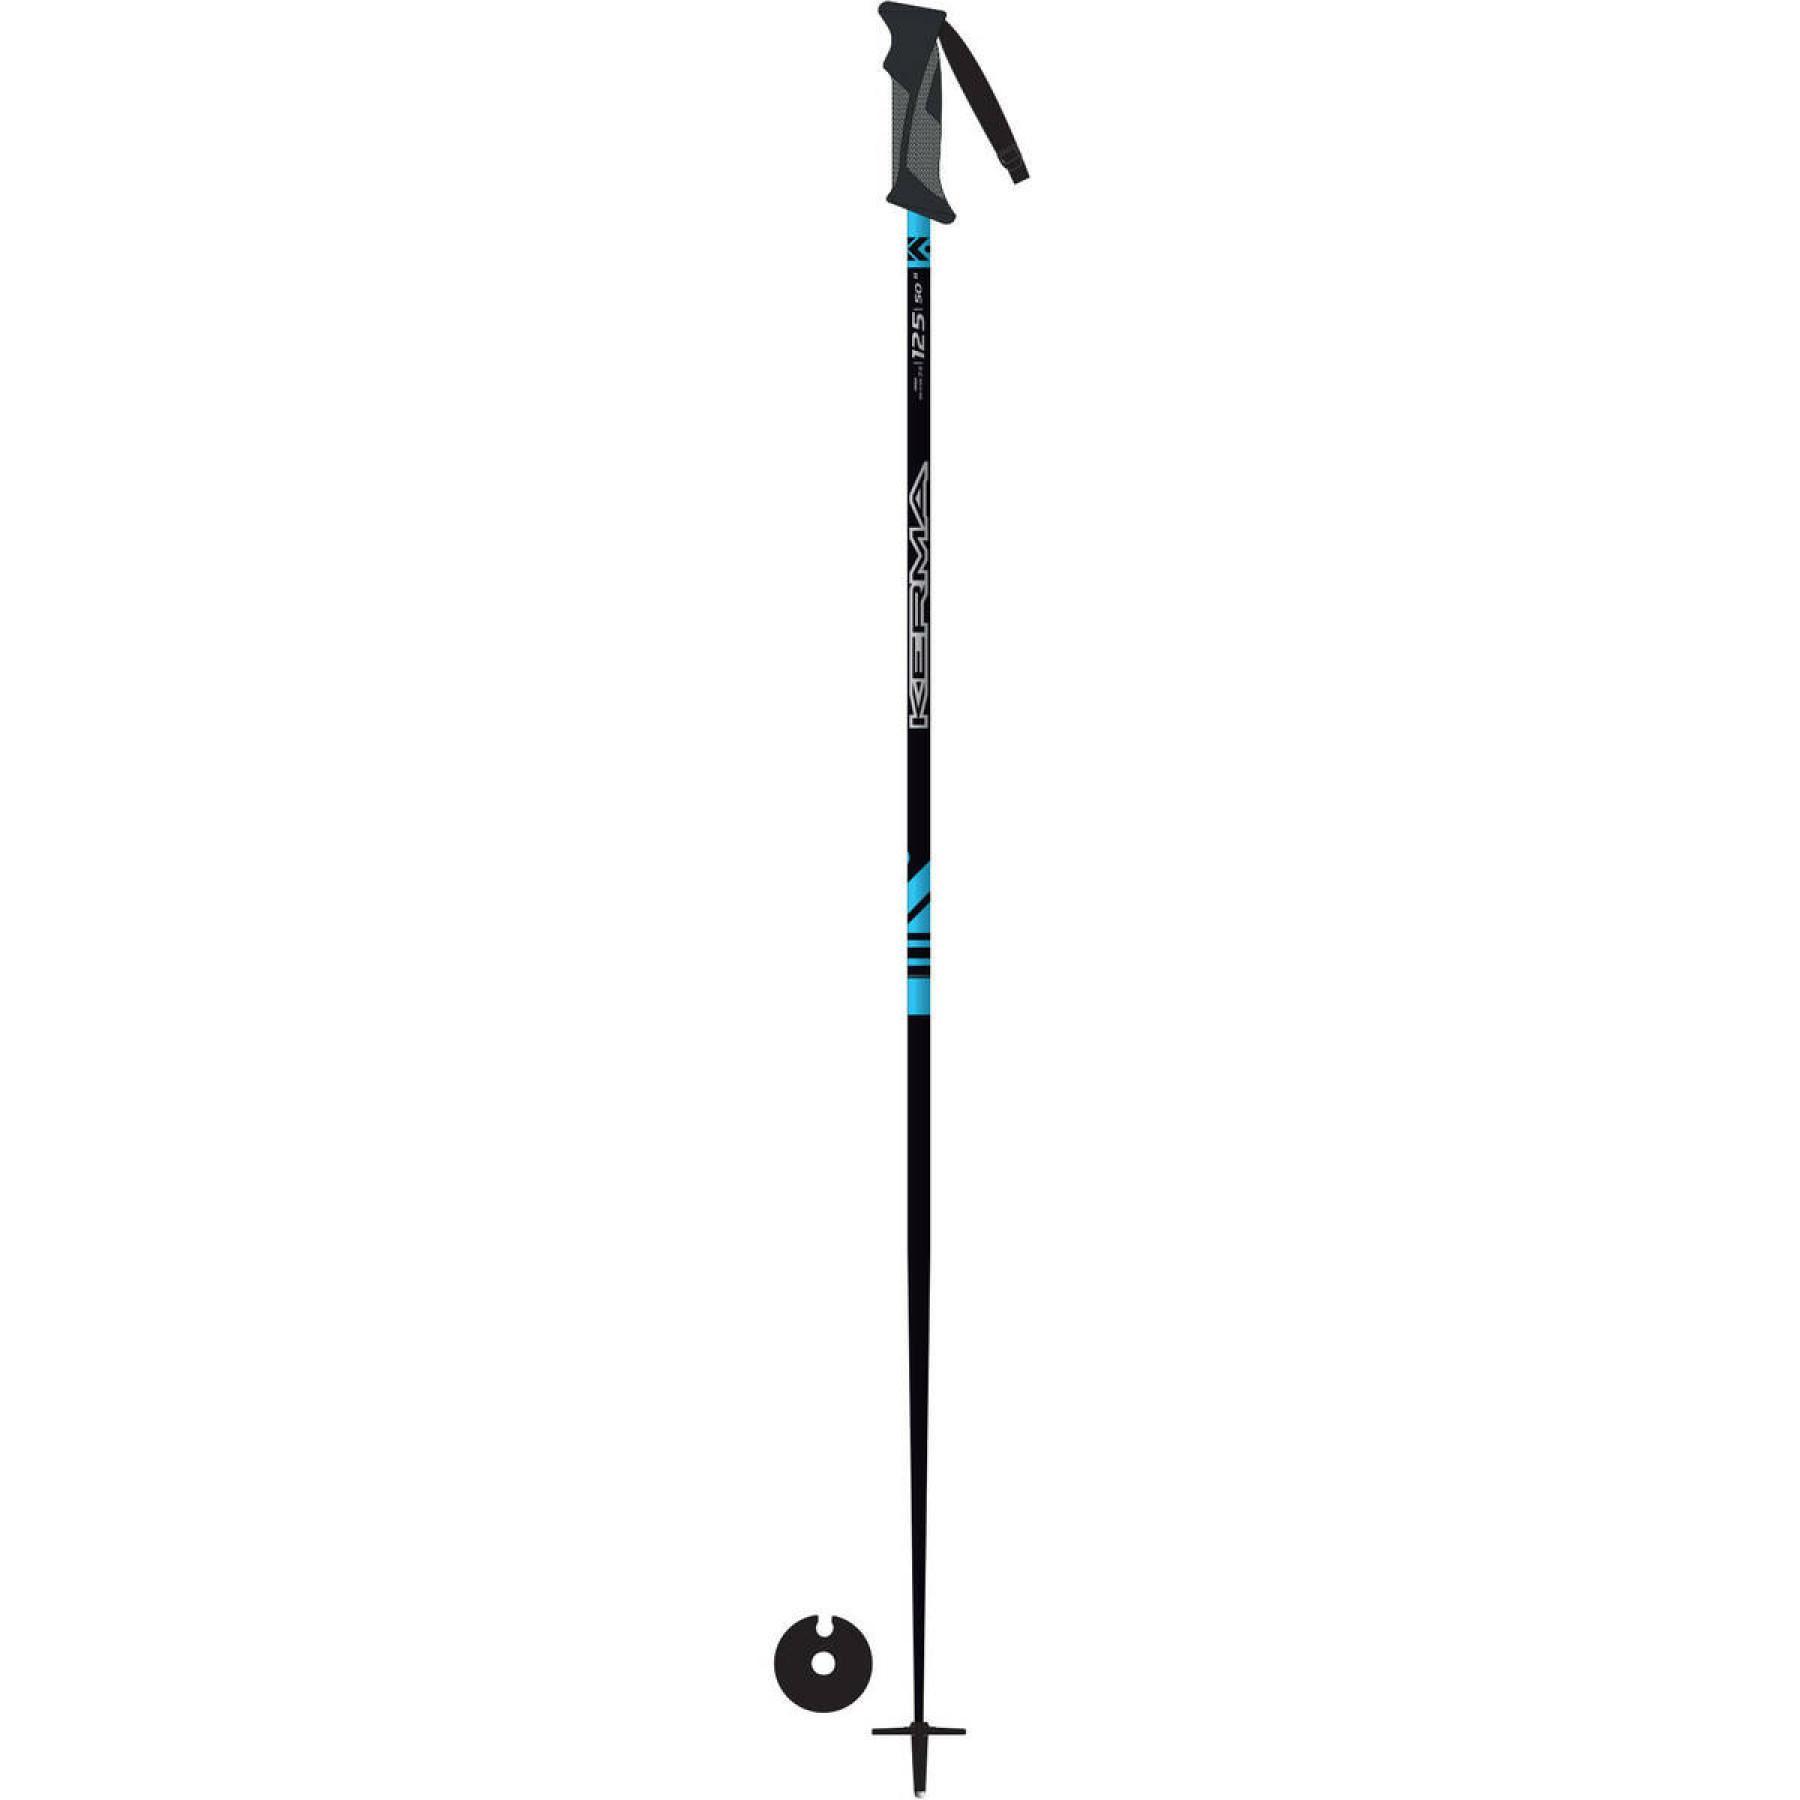 Batons de ski Kerma fiber sr